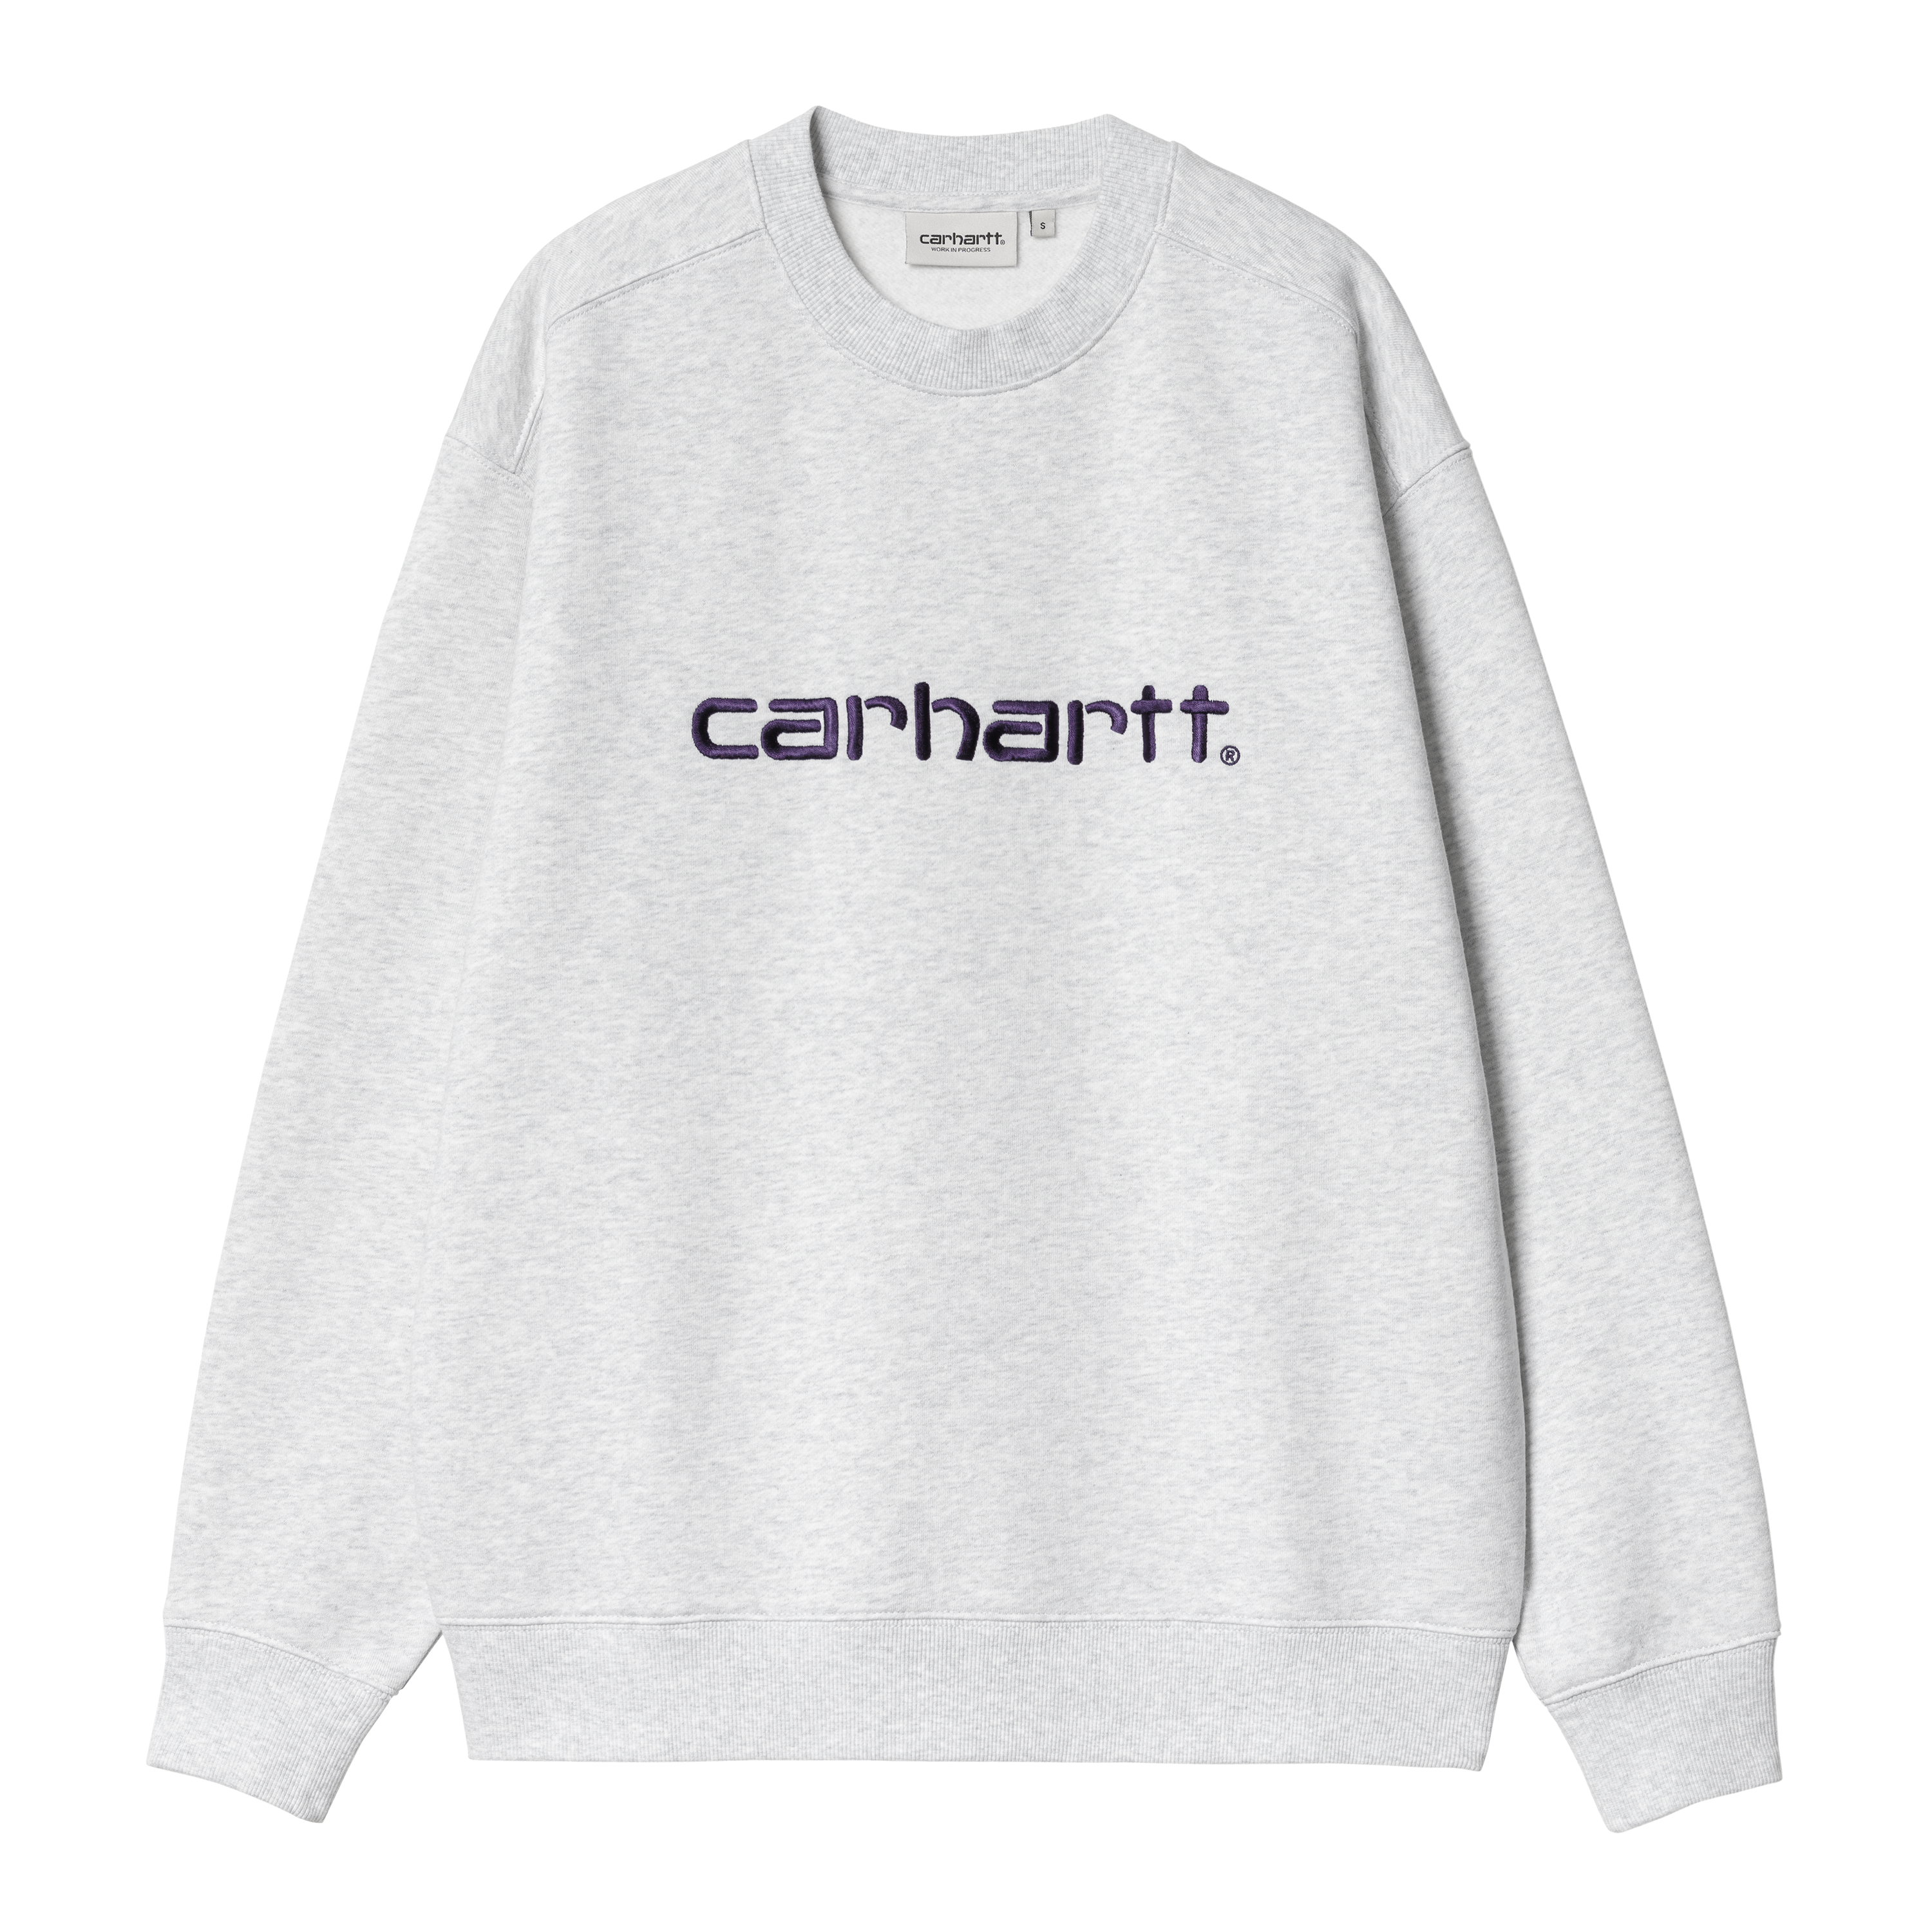 Carhartt WIP Women’s Carhartt Sweatshirt in Grey